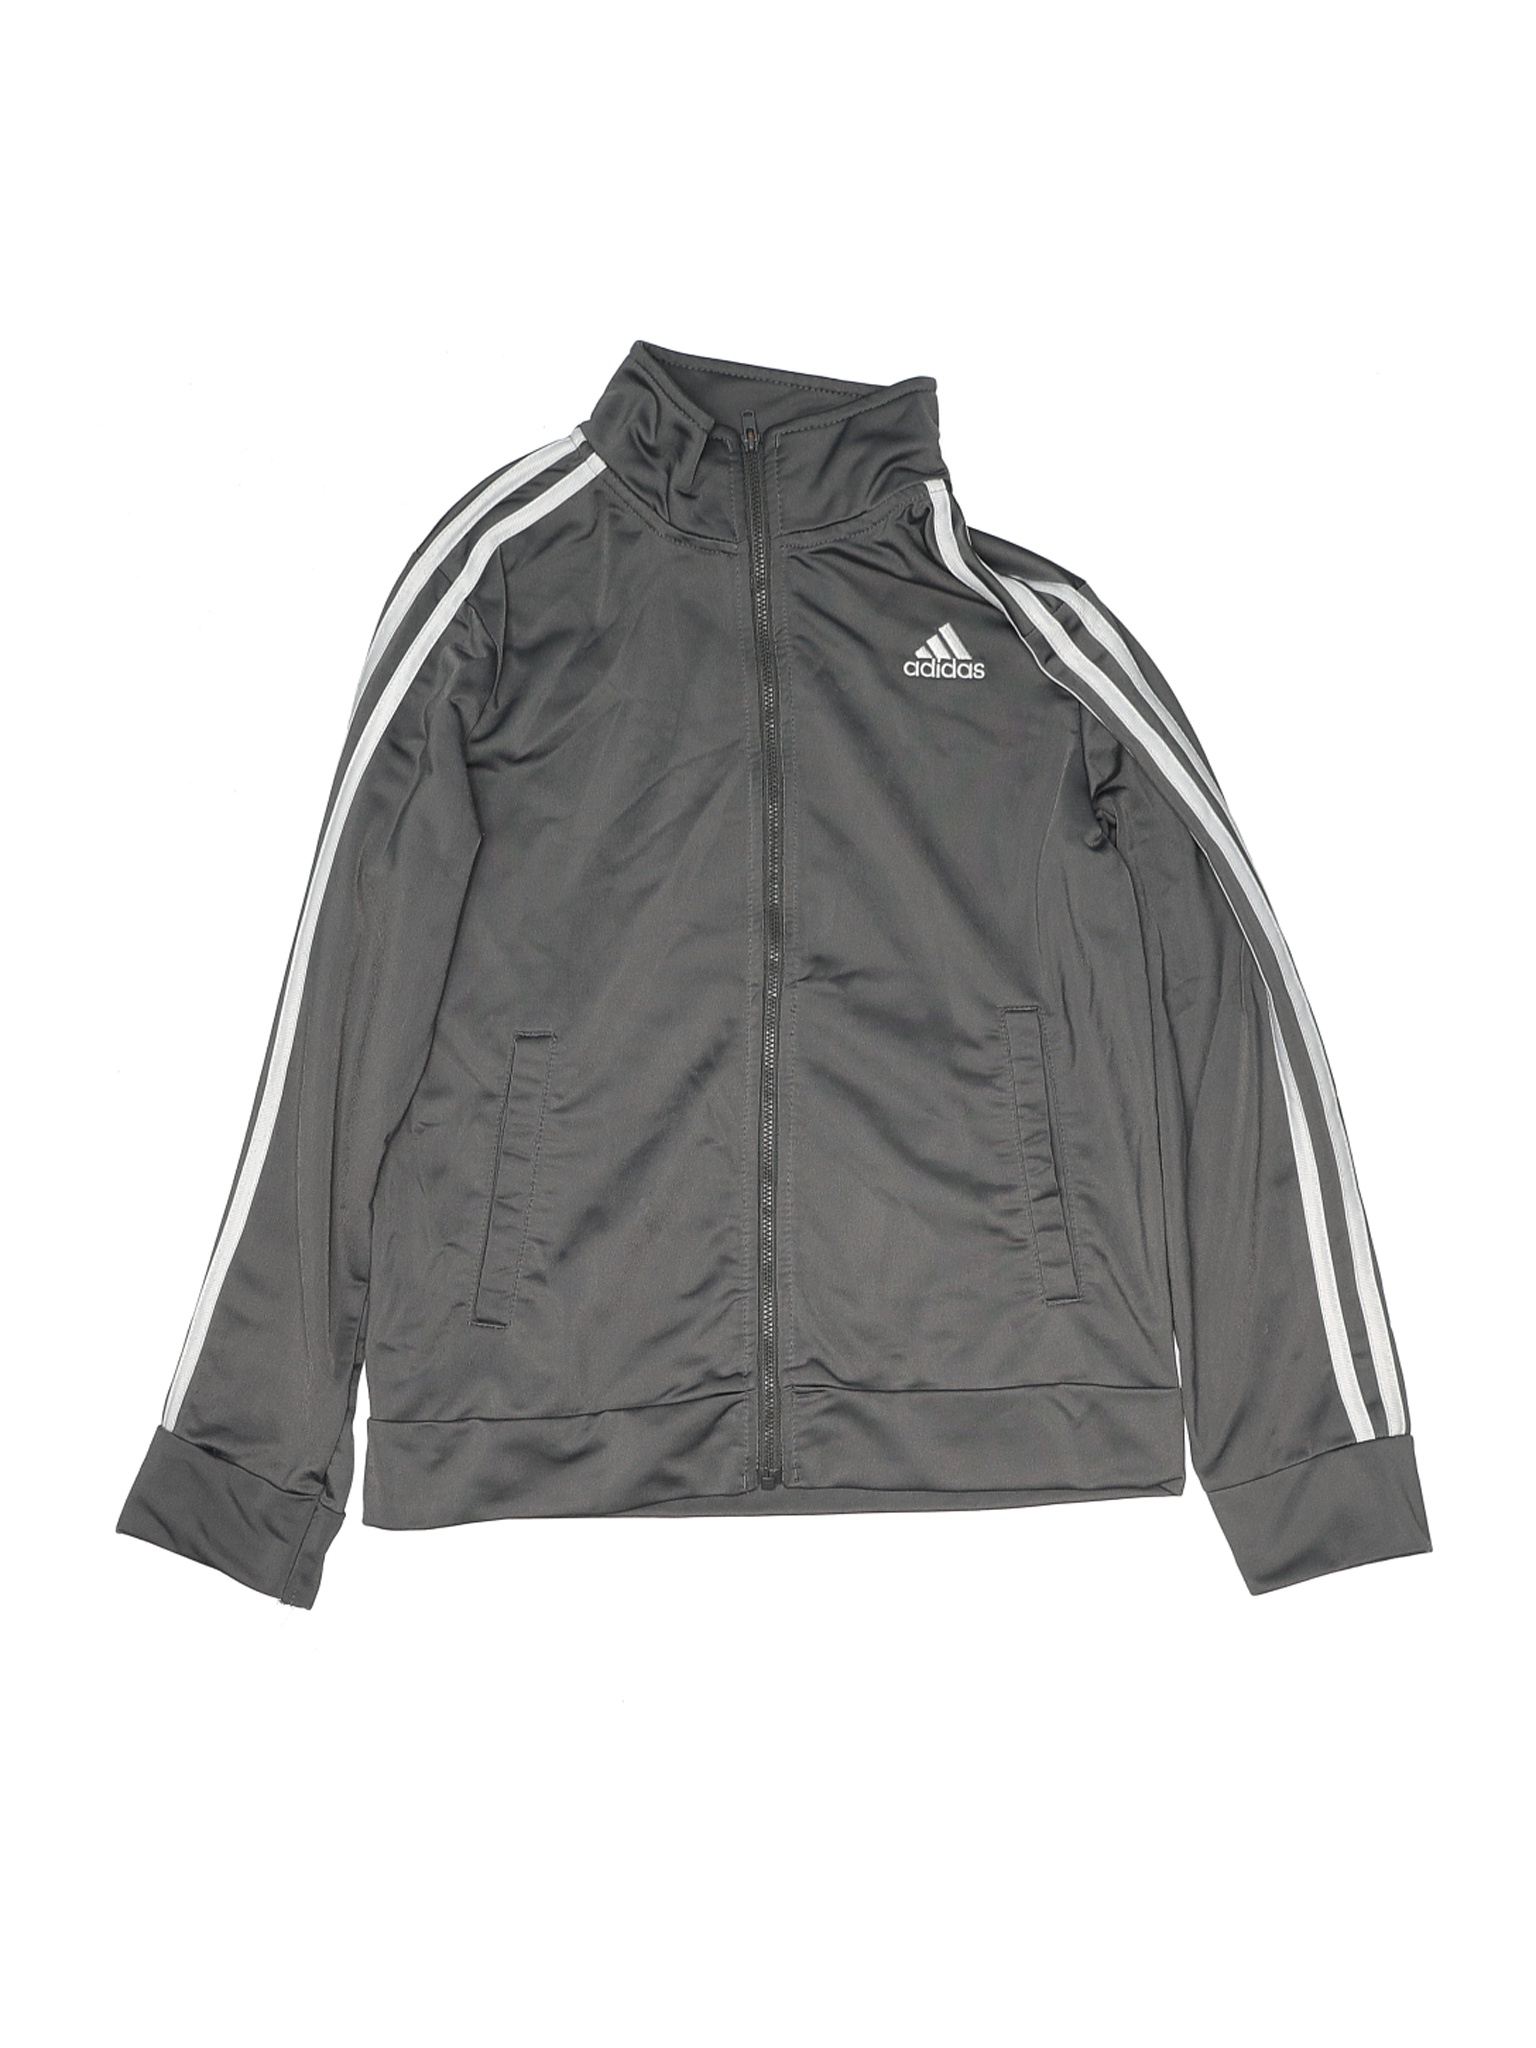 Adidas Boys Gray Track Jacket M Youth | eBay